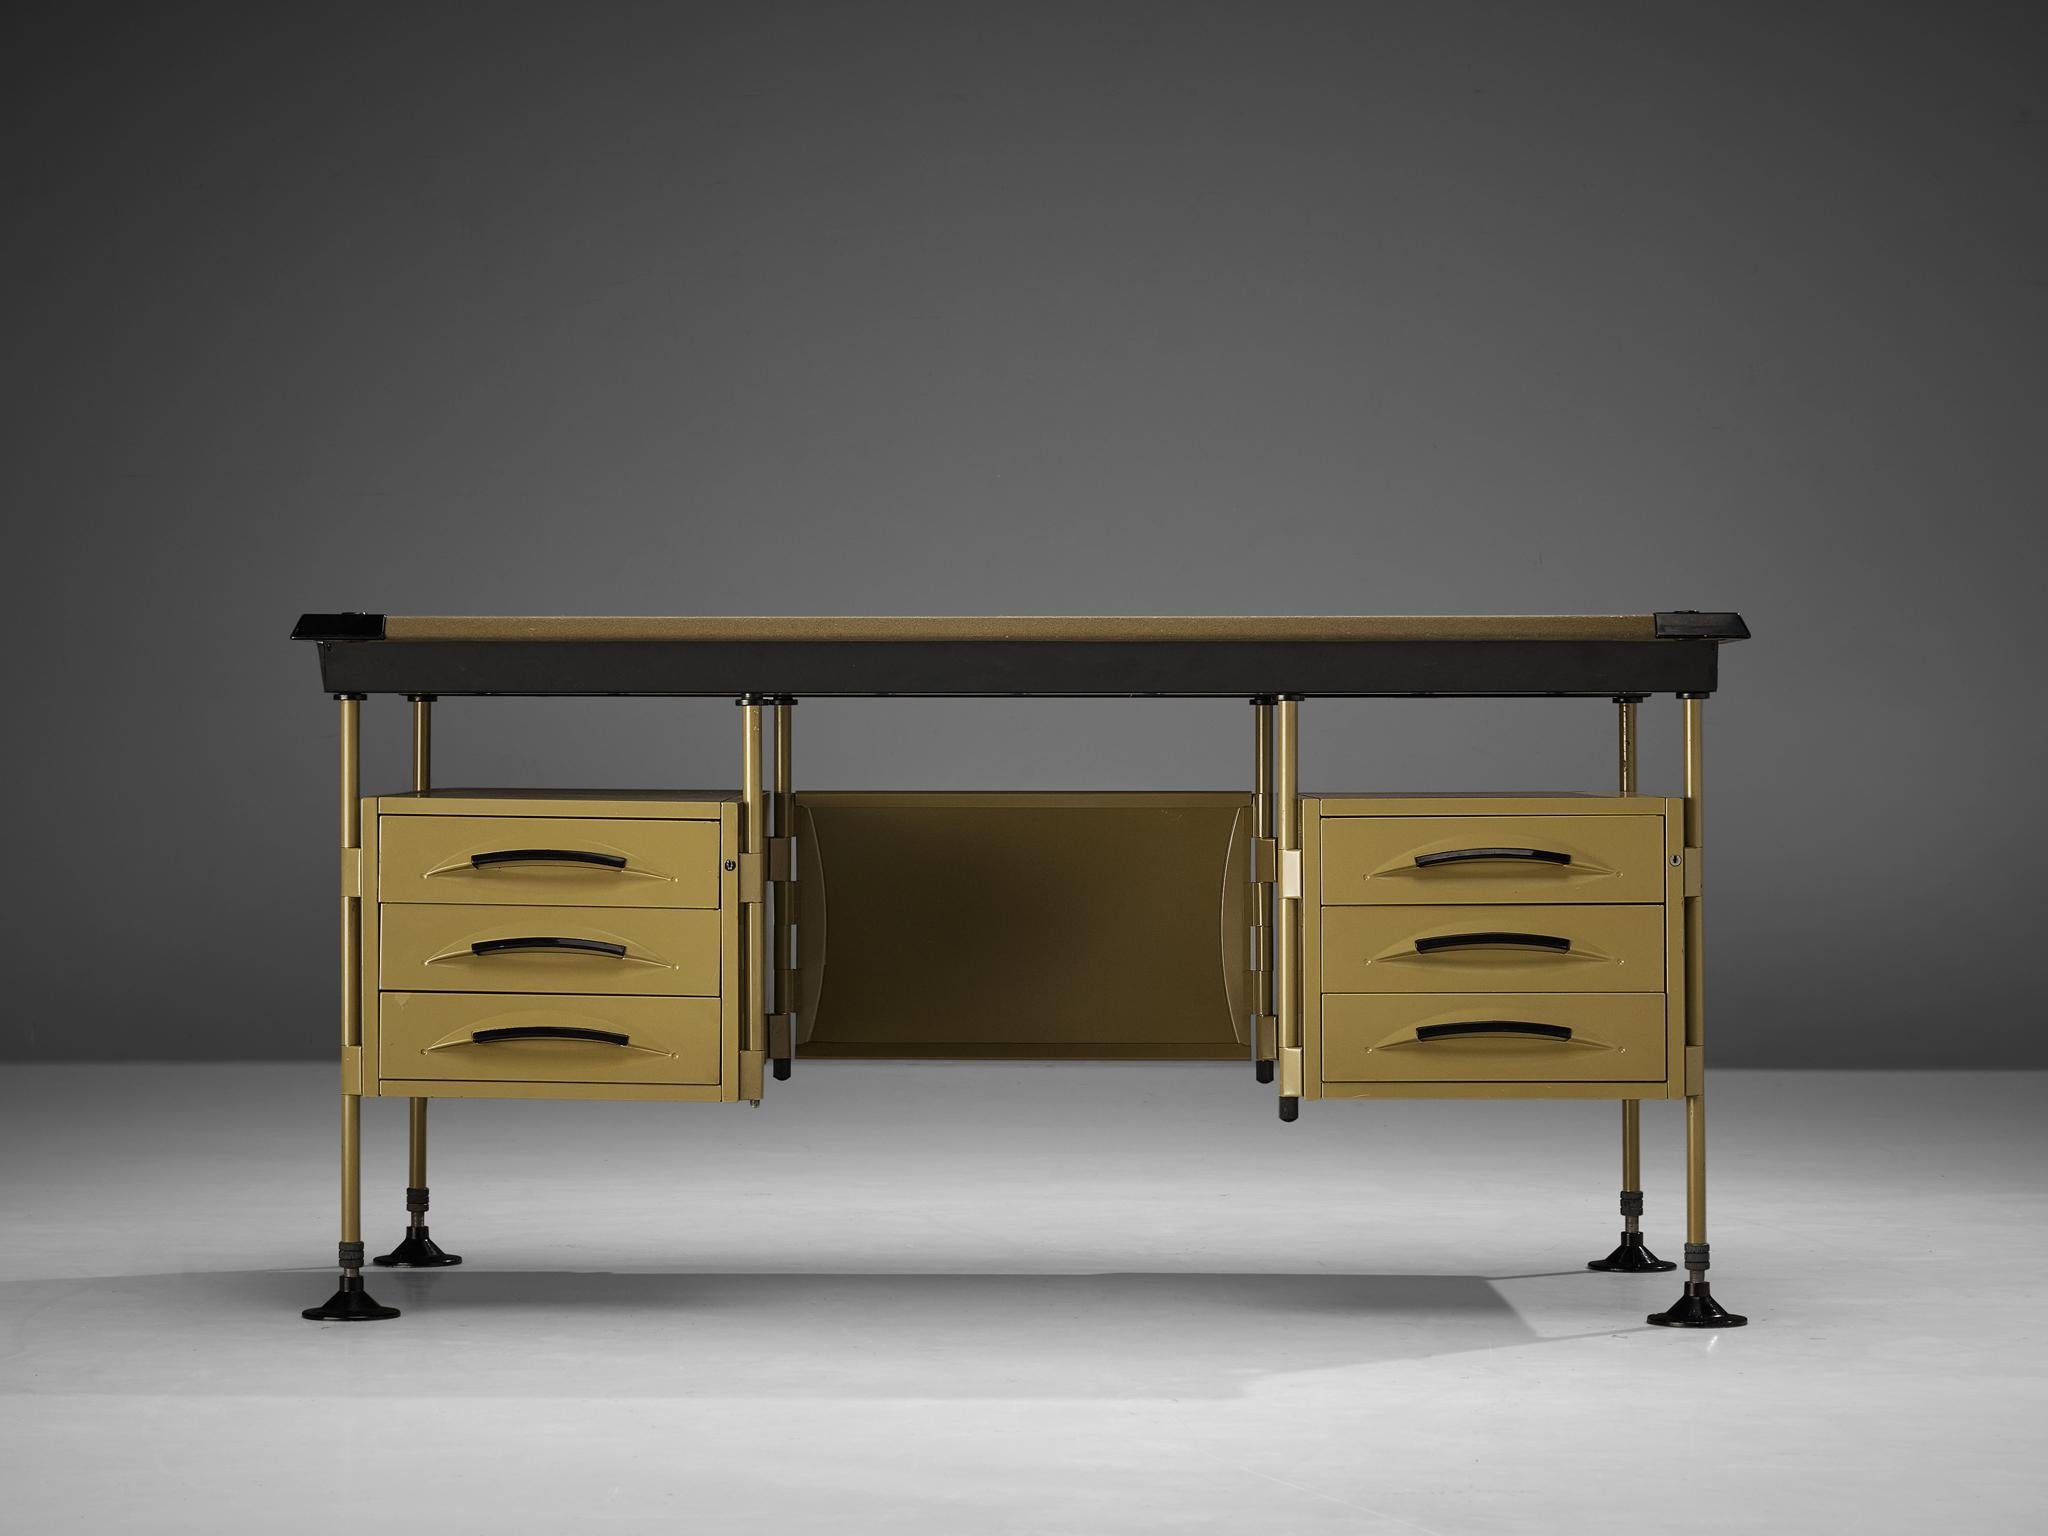 Italian Studio BBPR for Olivetti 'Spazio' Set with Desk, Sideboard and Table 